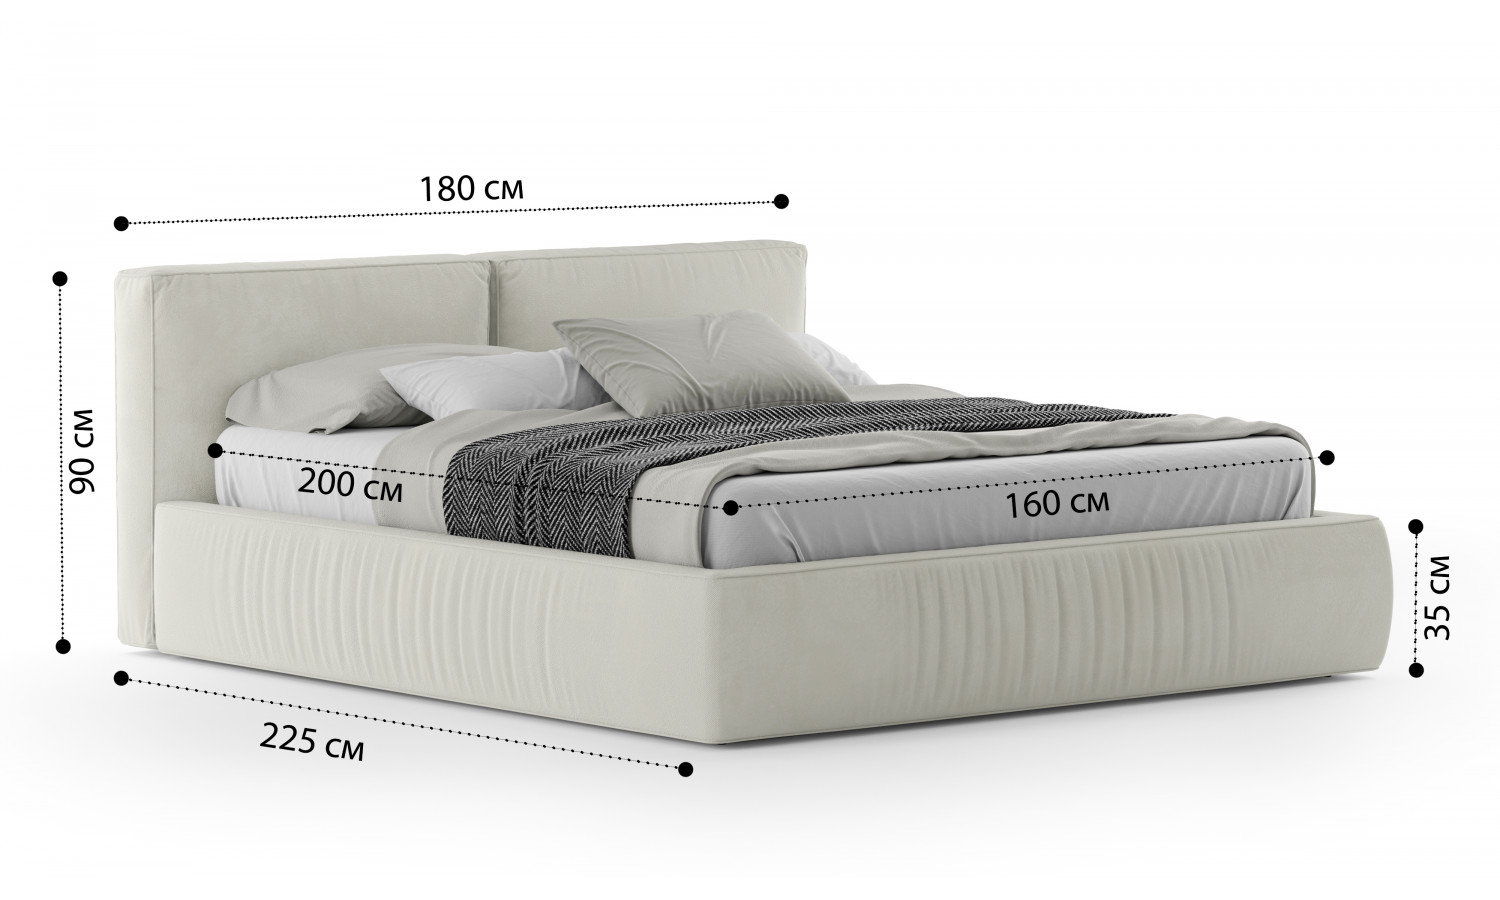 Кровать Лофт Velutto  001 1.6 м